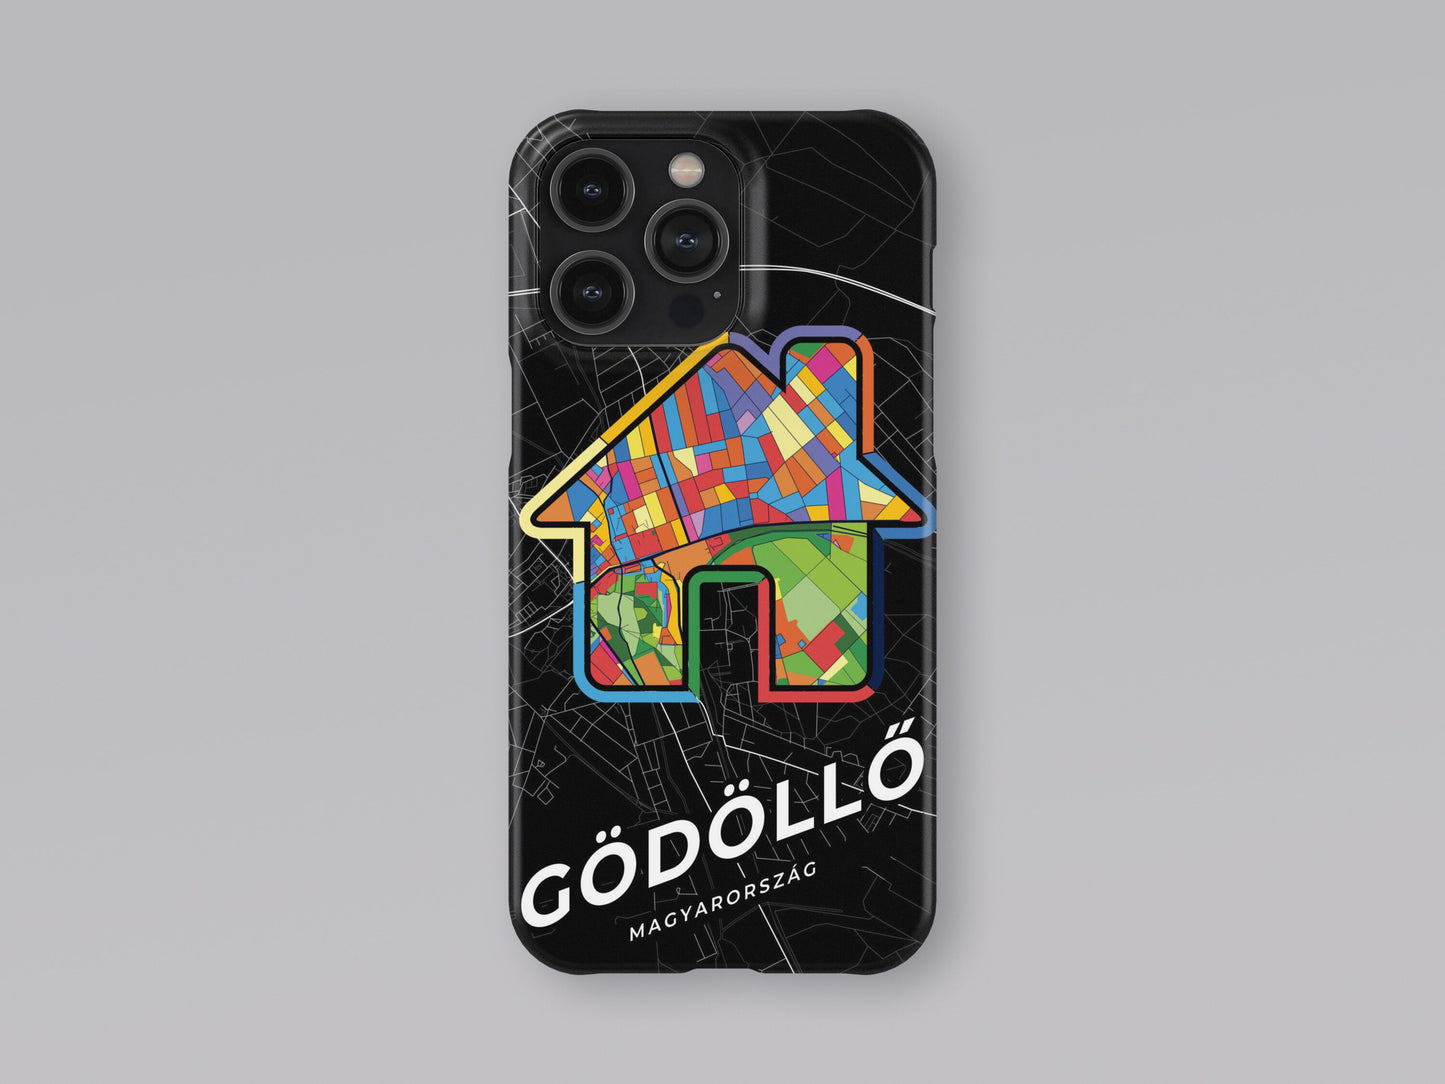 Gödöllő Hungary slim phone case with colorful icon. Birthday, wedding or housewarming gift. Couple match cases. 3